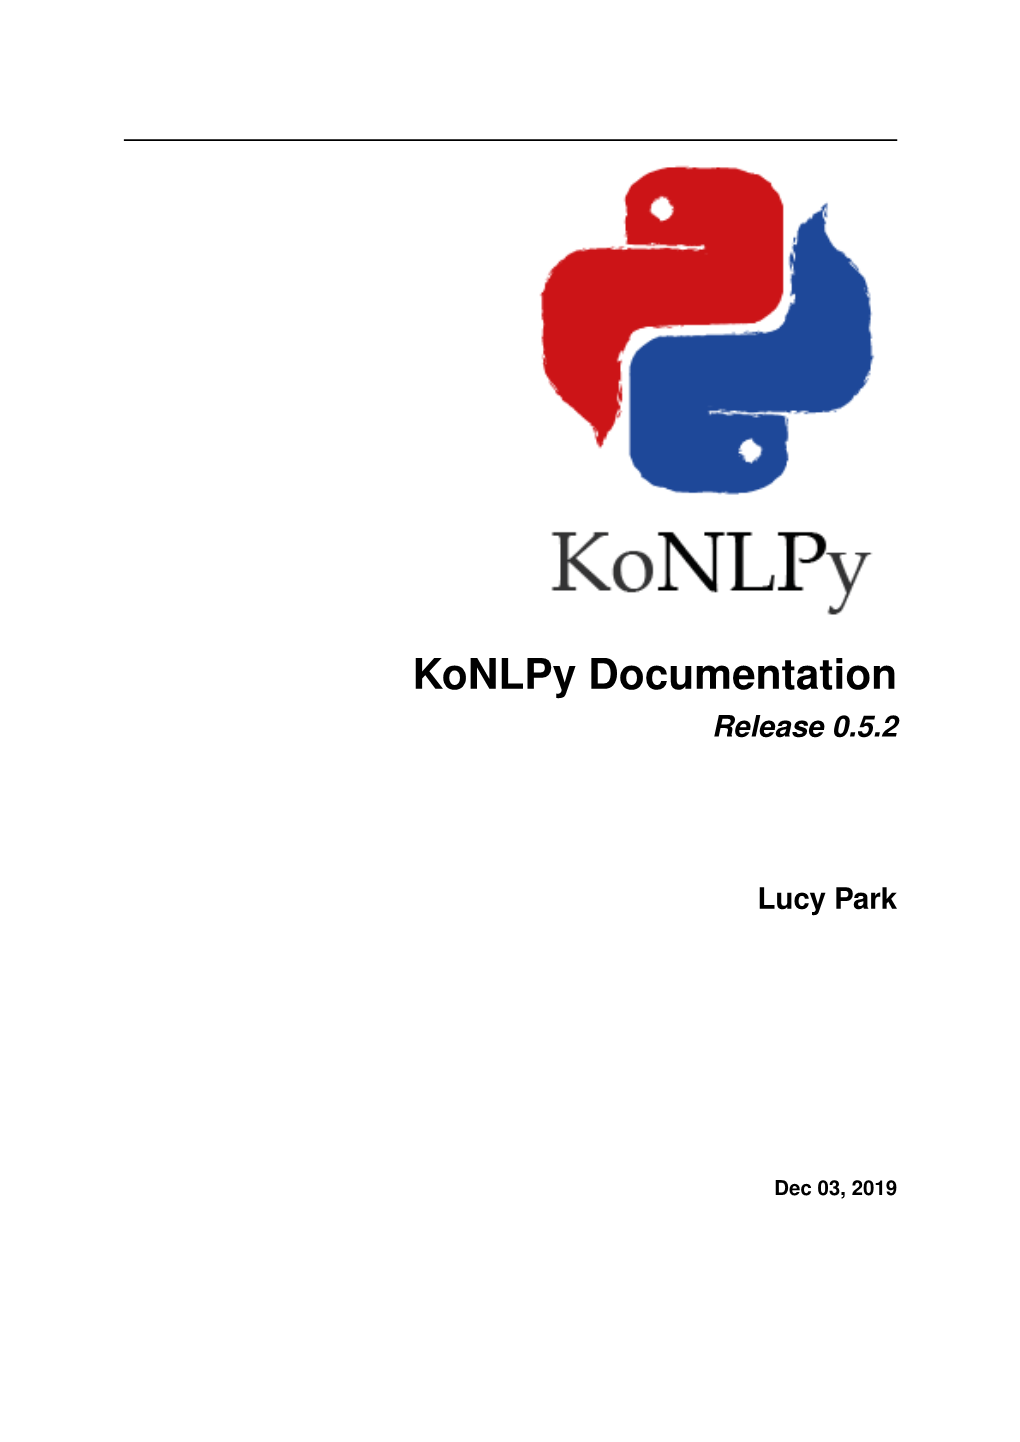 Latest) Konlpy (Pro- Nounced “Ko En El PIE”) Is a Python Package for Natural Language Processing (NLP) of the Korean Language